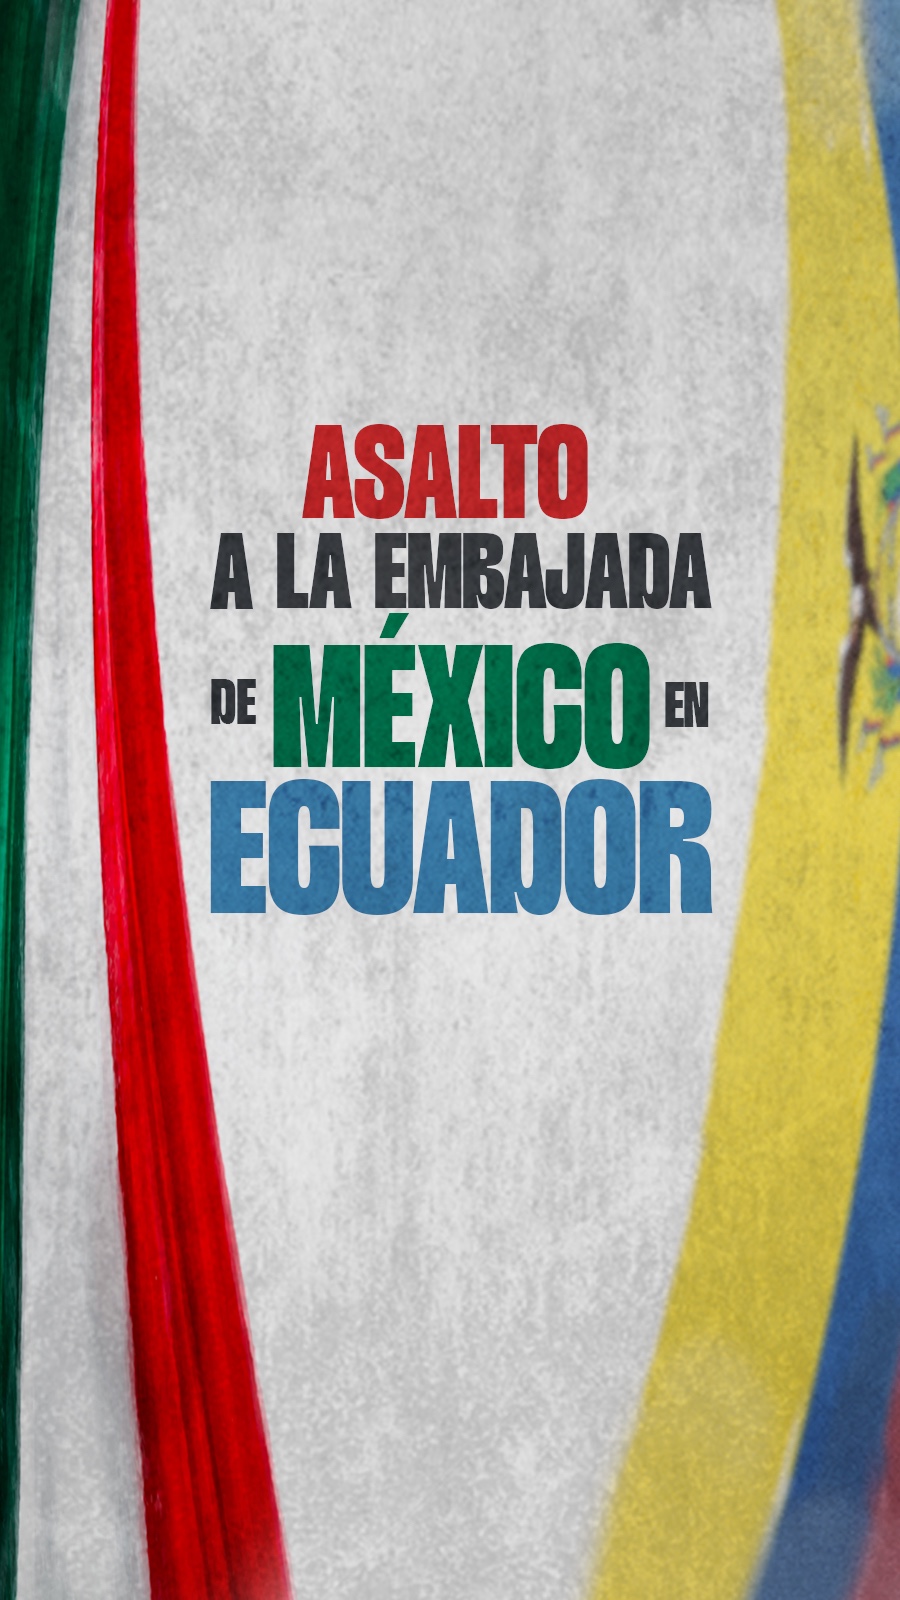 Asalto a la embajada de México en Ecuador